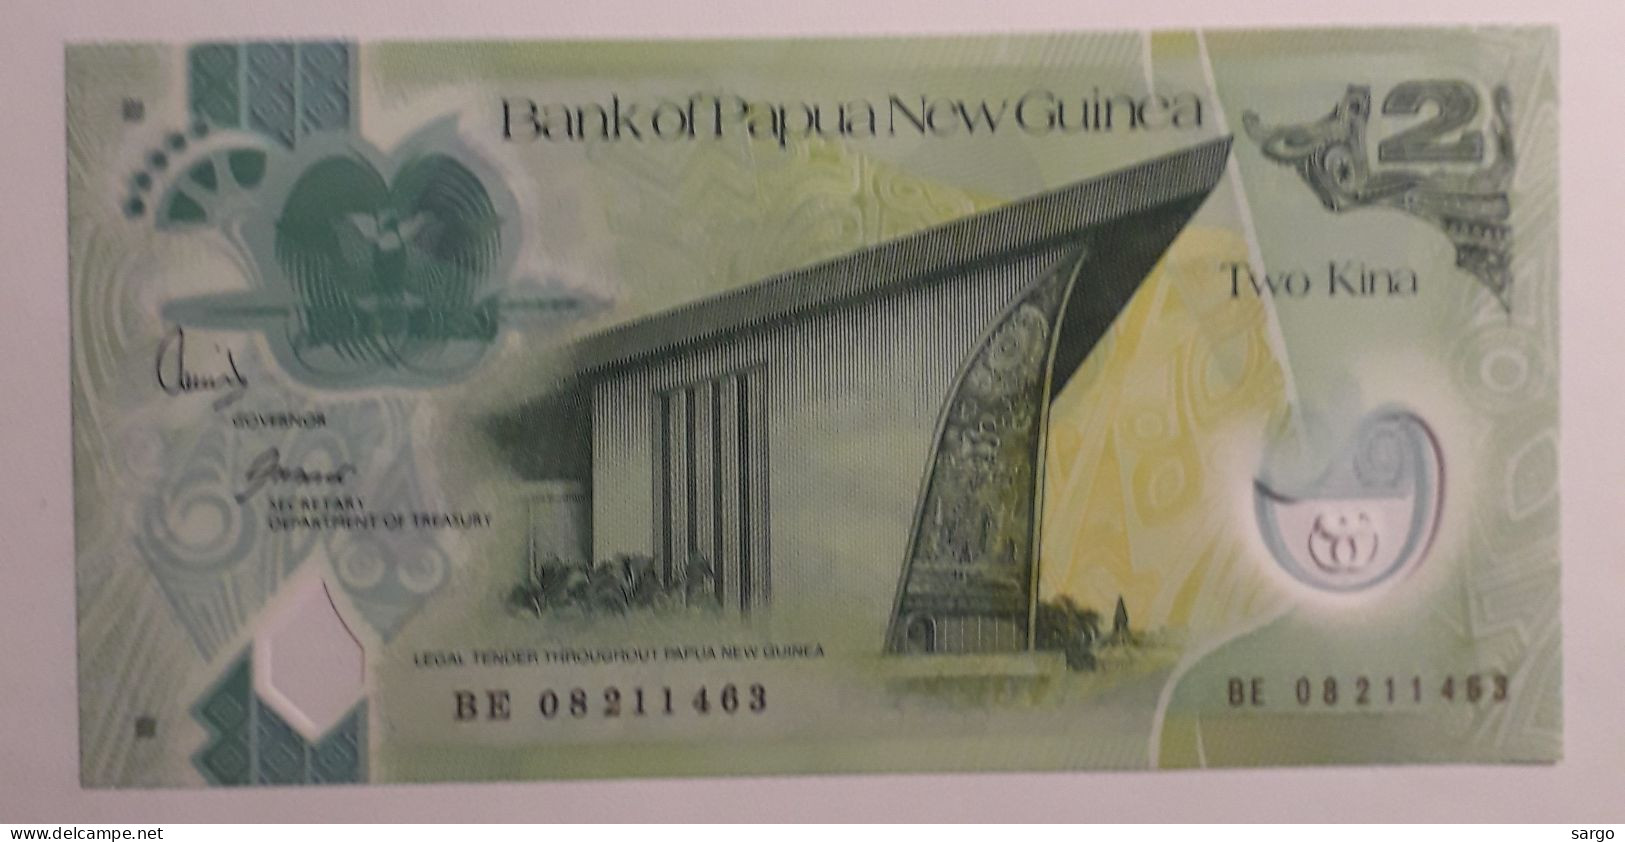 PAPUA NEW GUINEA - 2 KINA - 2007-2014 - UNCIRC P 38 - POLYMER - BANKNOTES - PAPER MONEY - CARTAMONETA - - Papua Nueva Guinea